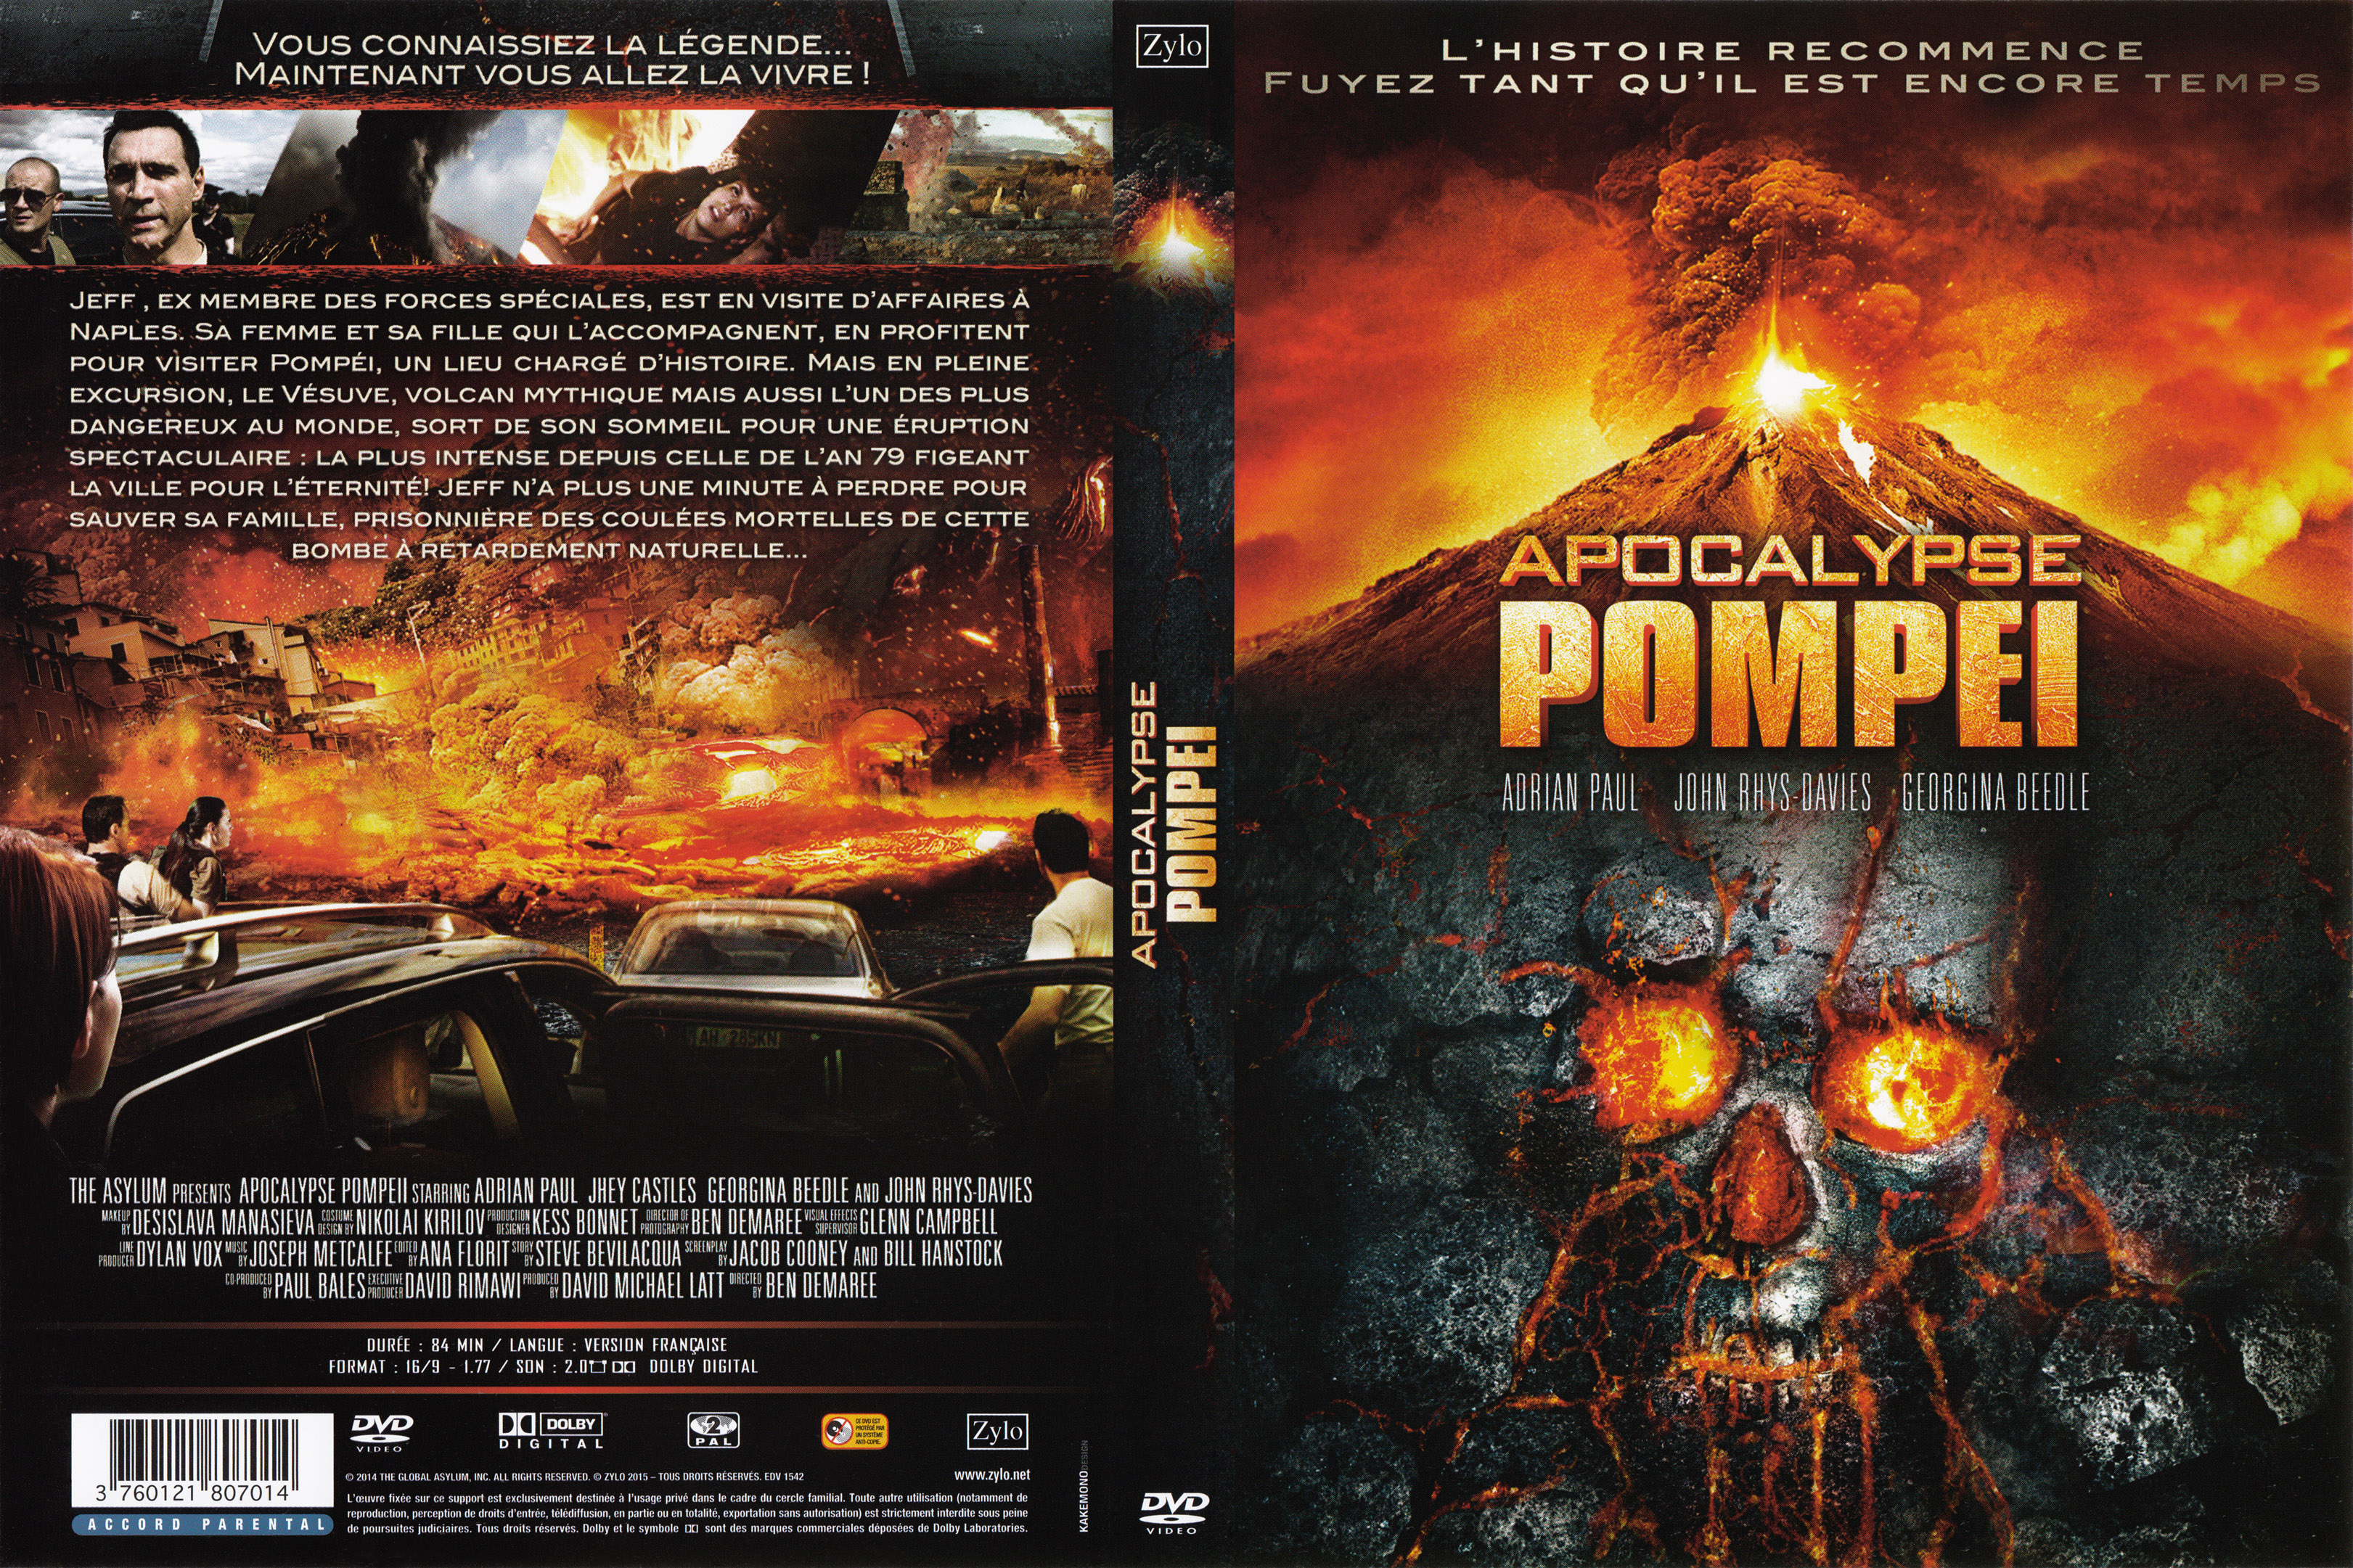 Jaquette DVD Apocalypse pompei